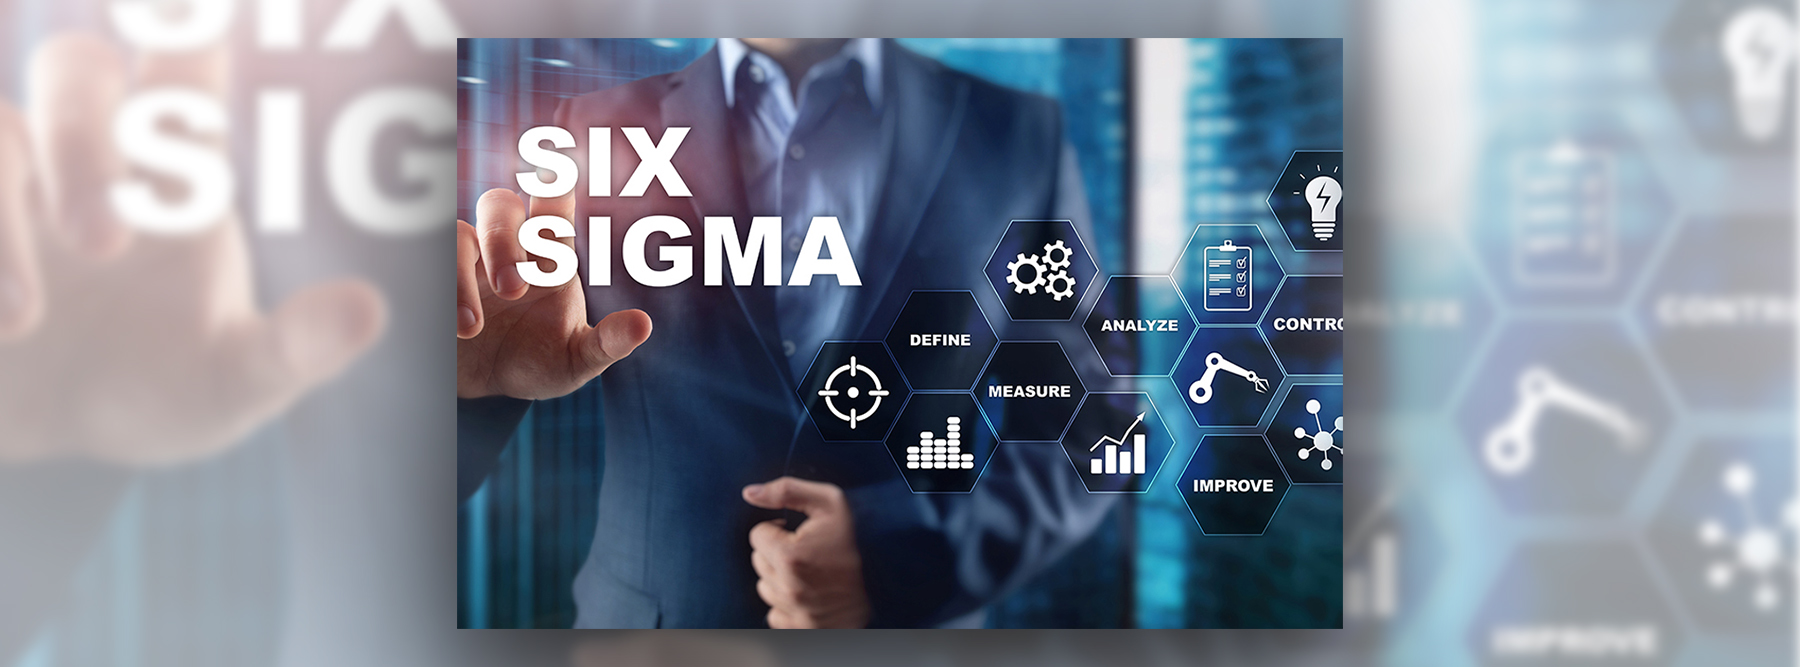 Lean Six Sigma Webinar